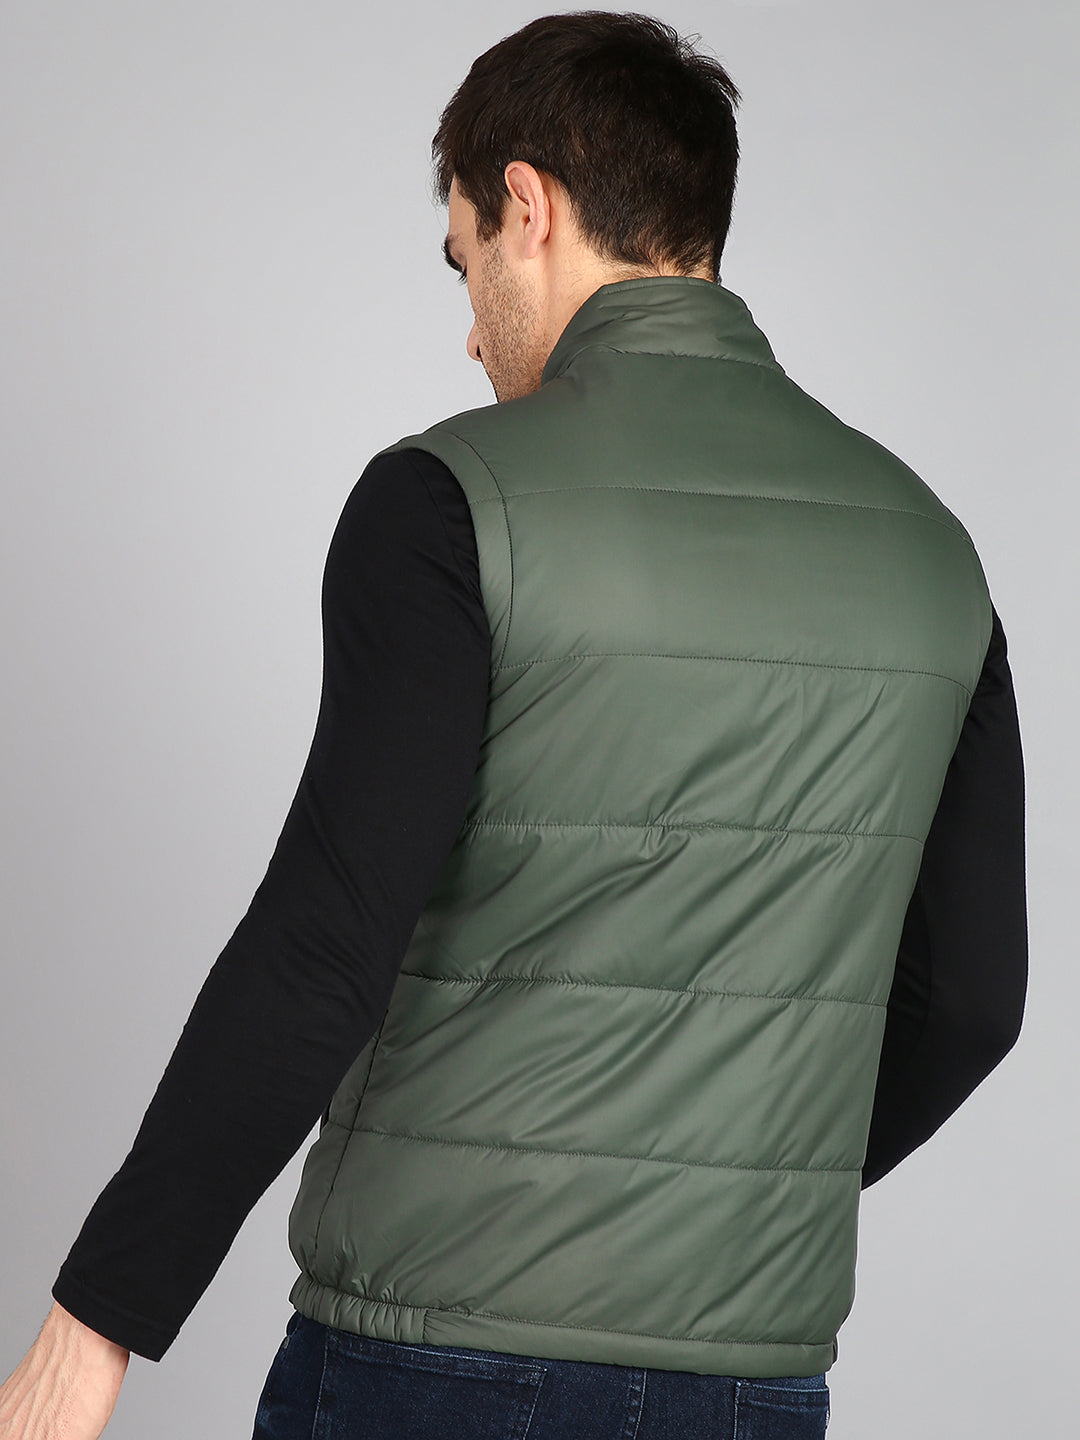 Men's Olive Green Sleeveless Zippered Puffer Jacket